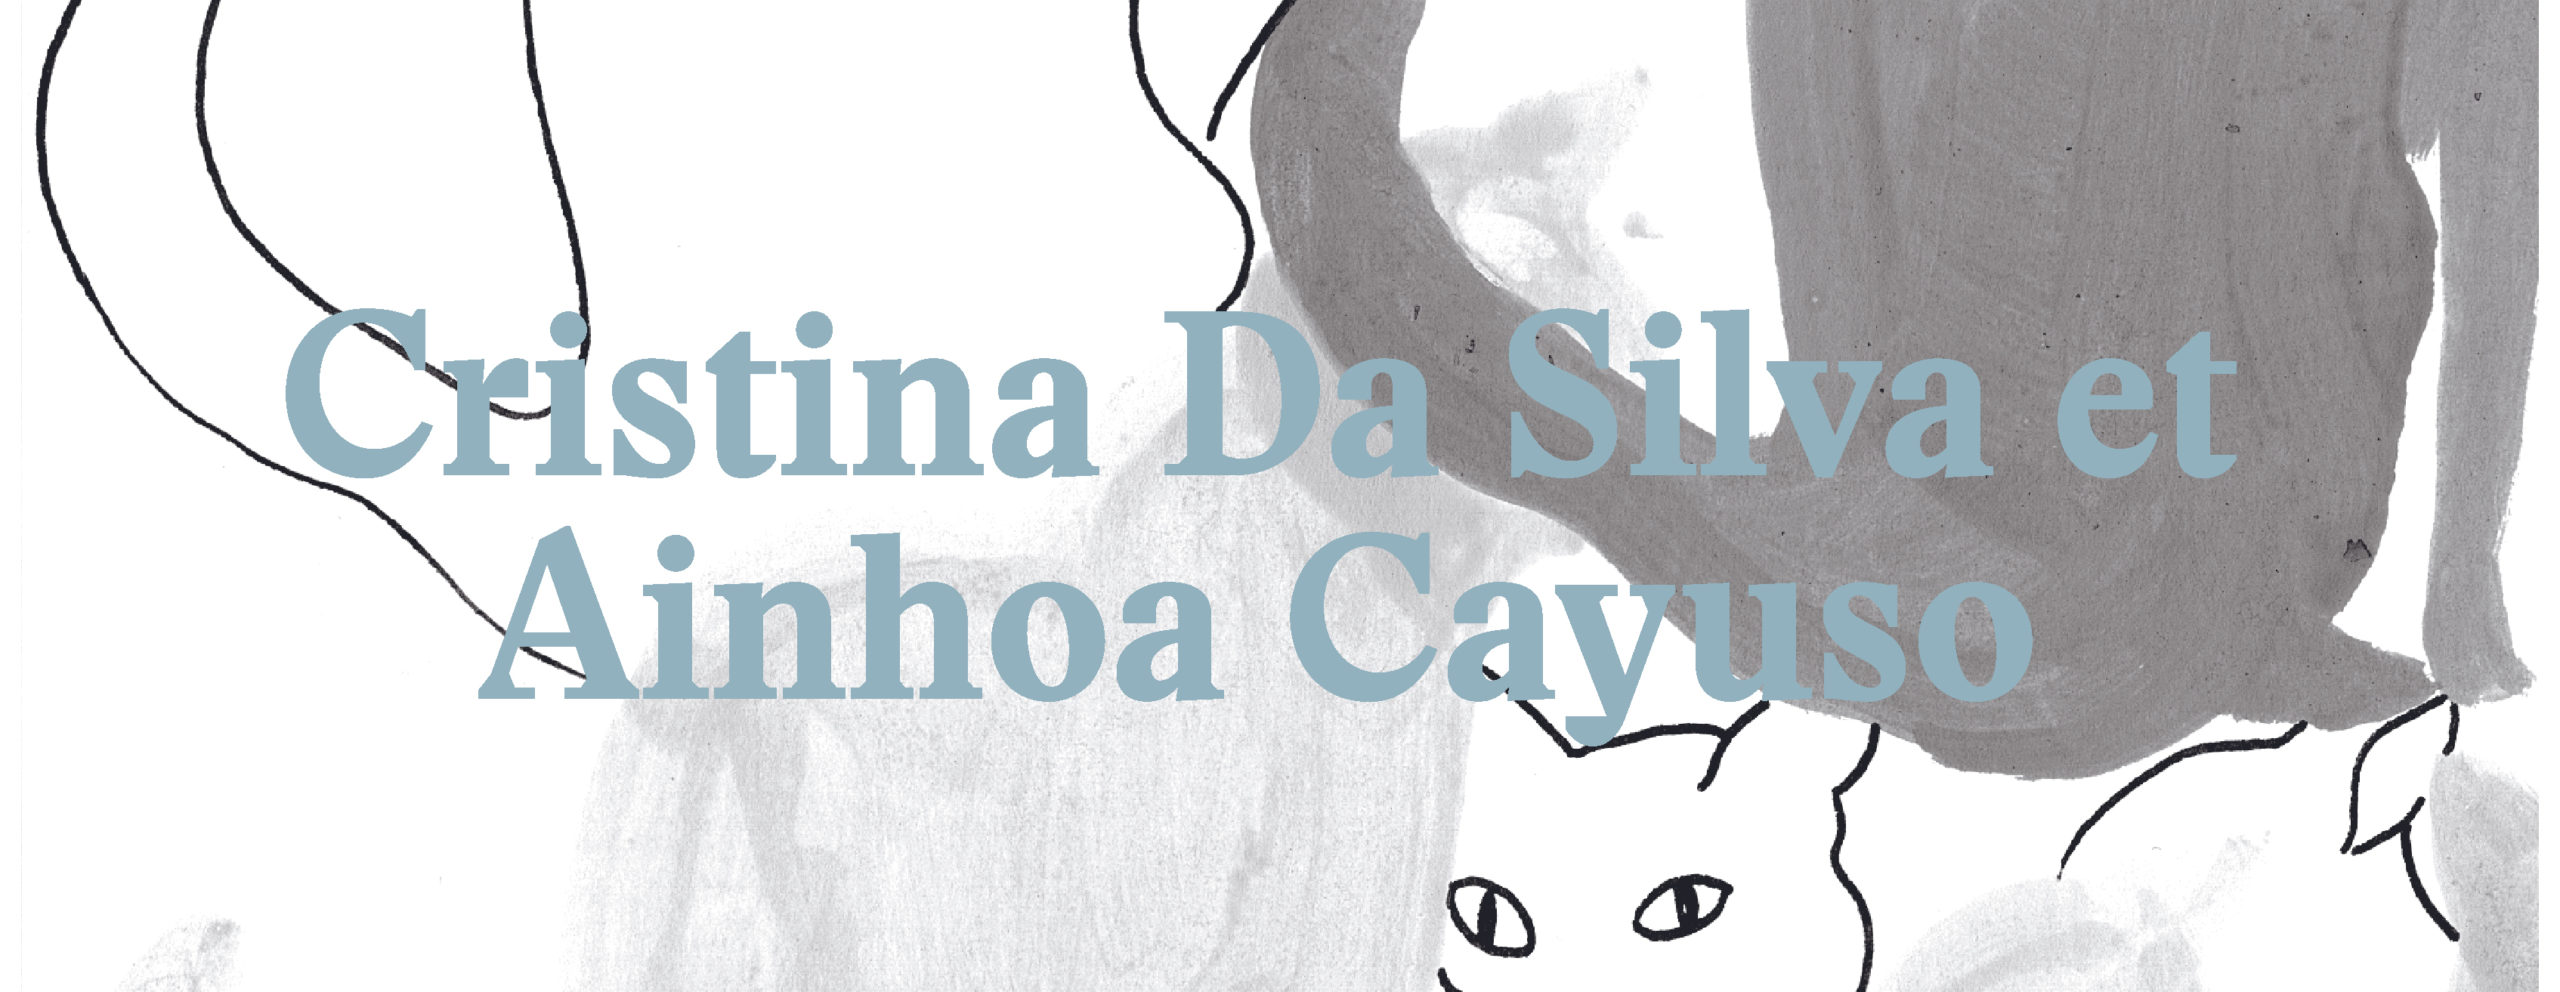 Vernissage des livres de Cristina Da Silva et Ainhoa Cayuso à Genève